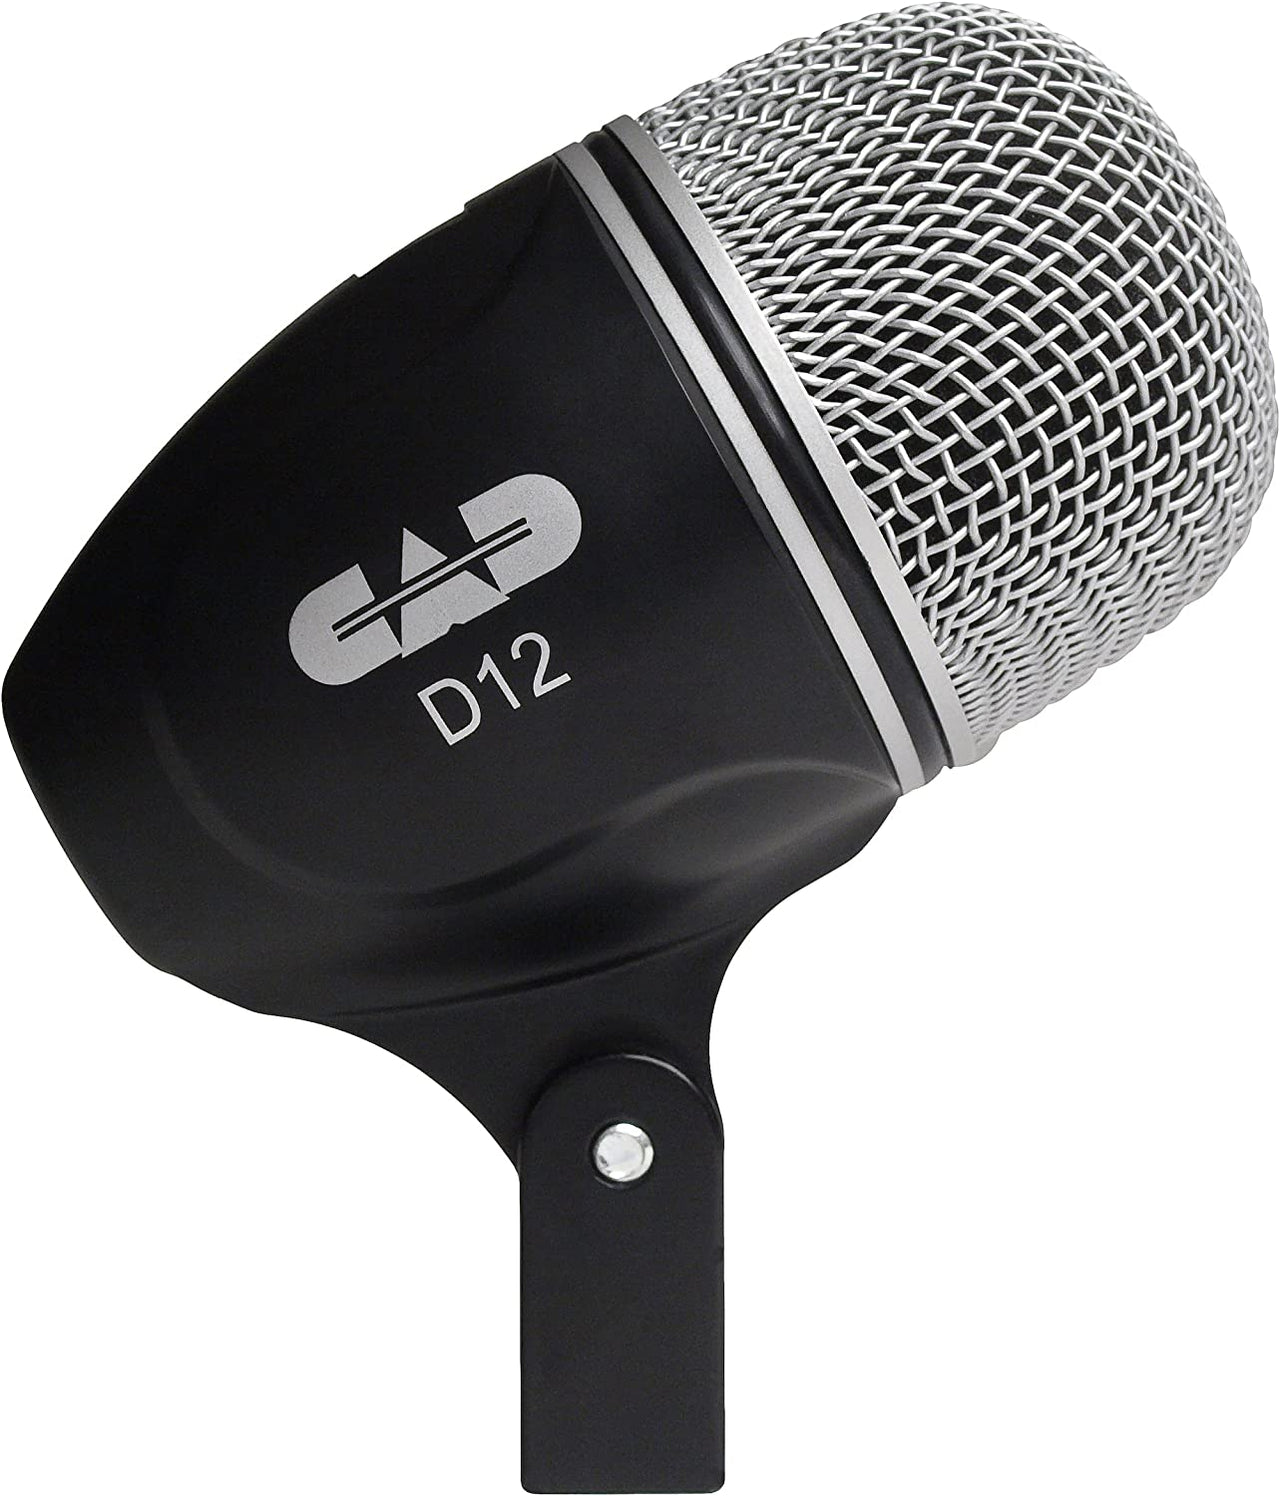 CAD Audio D12 Dynamic Cardioid Kick Microphone